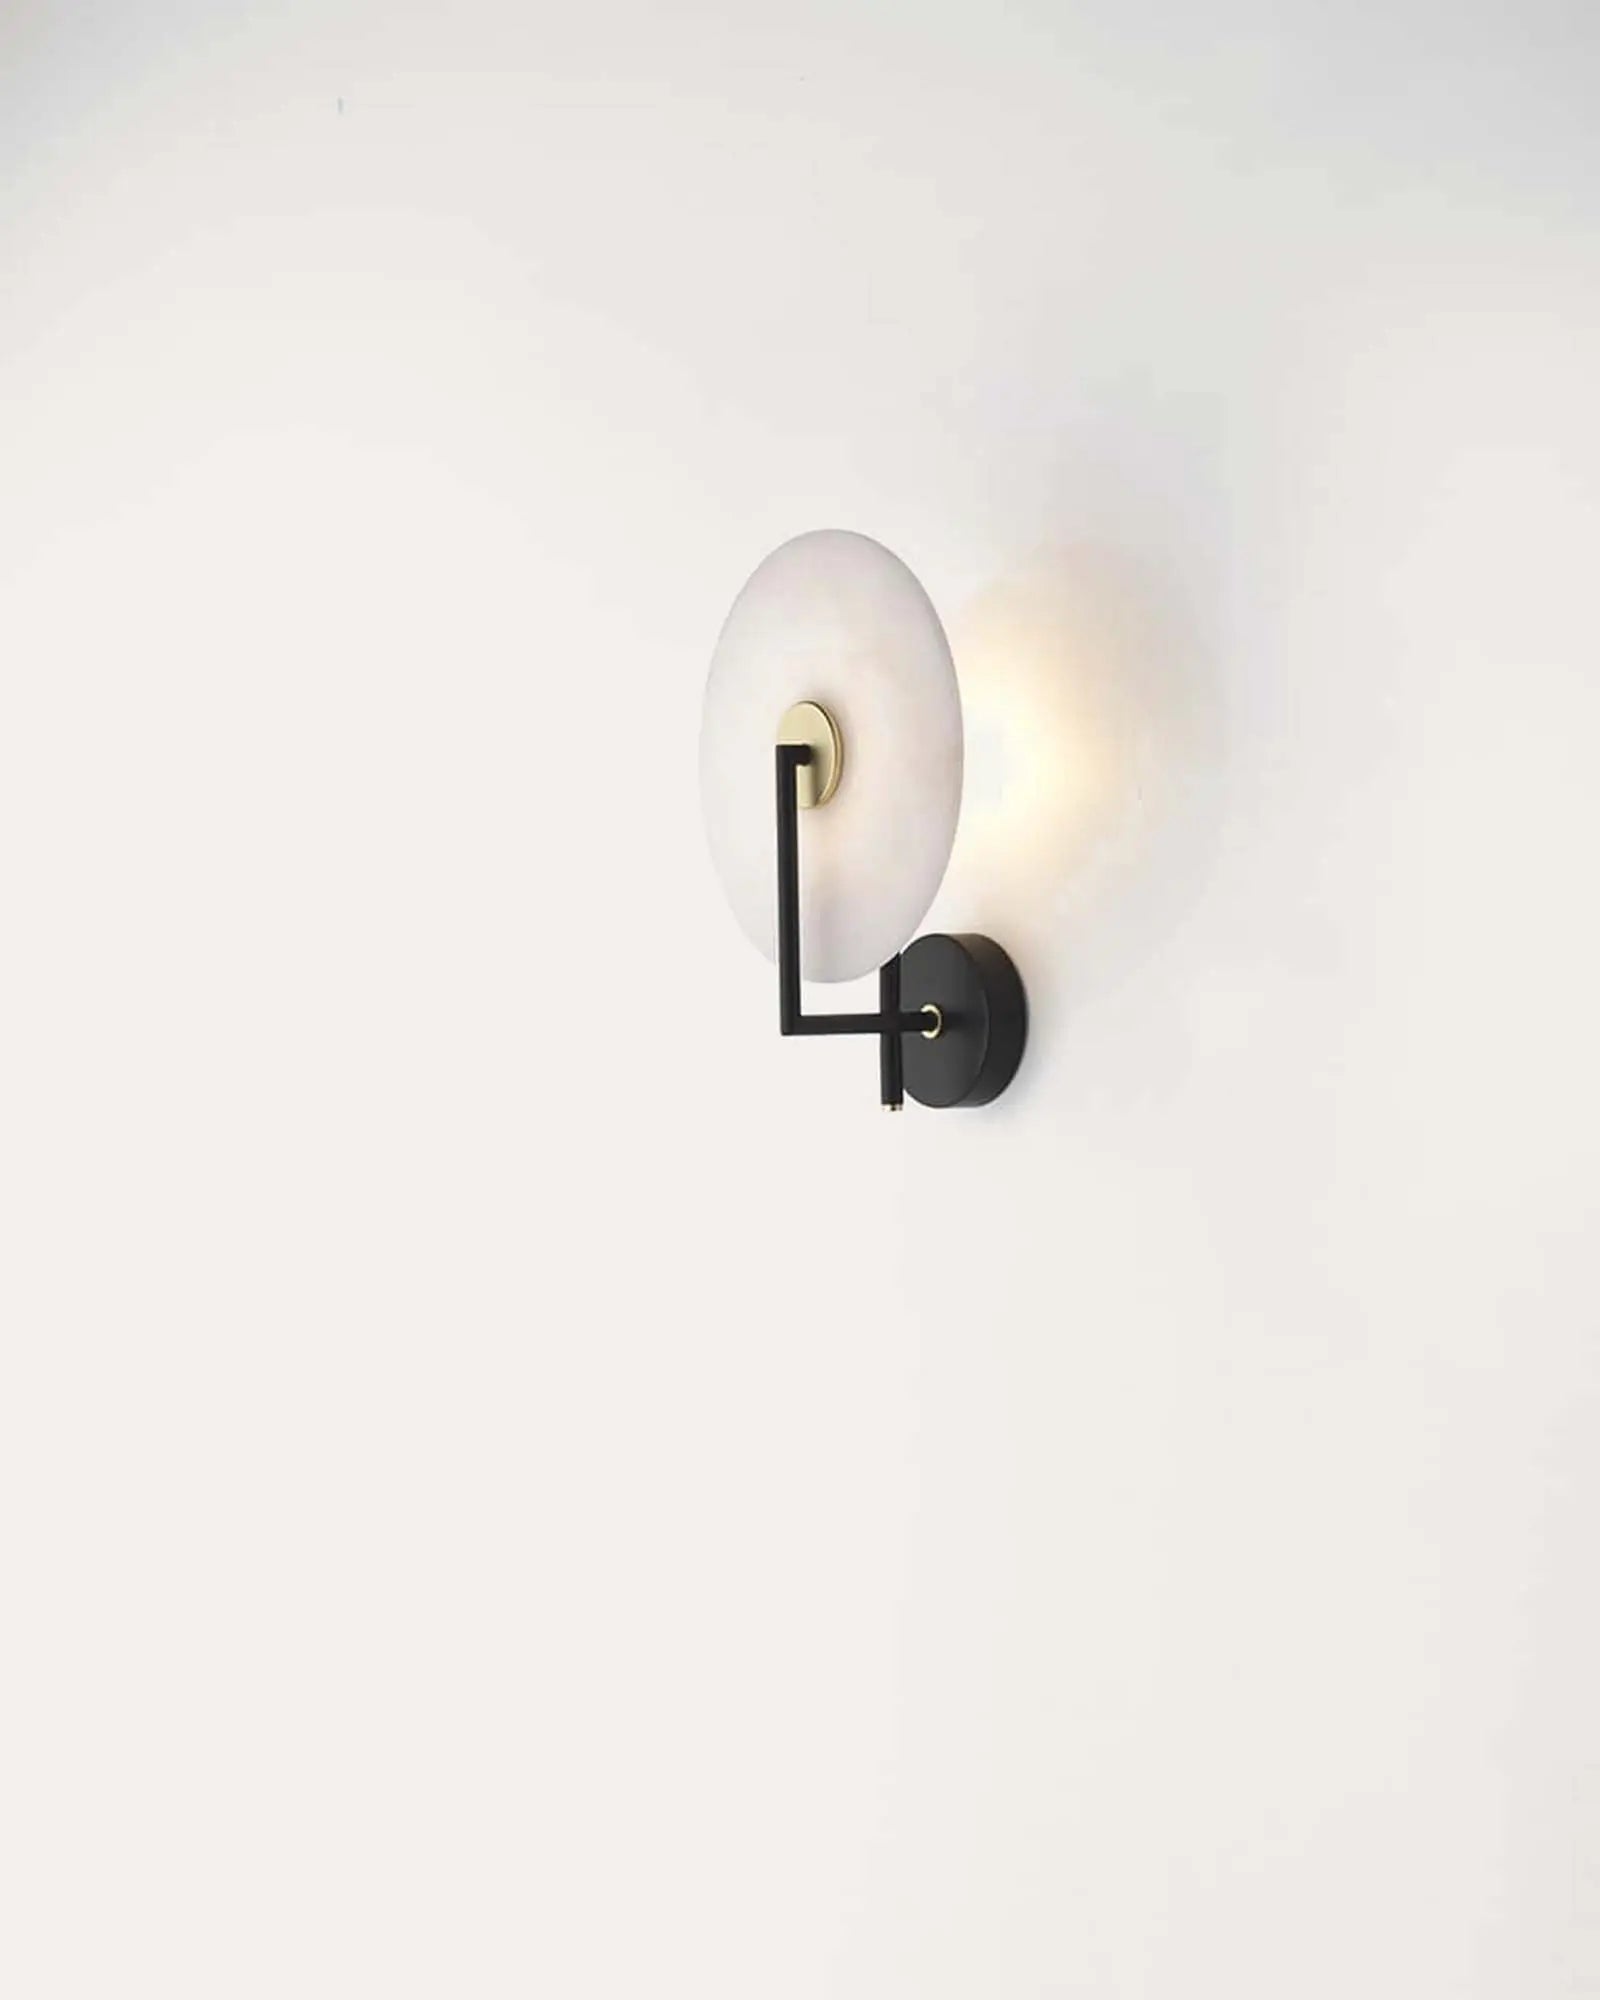 Erto Wall light minimalistic disc shade